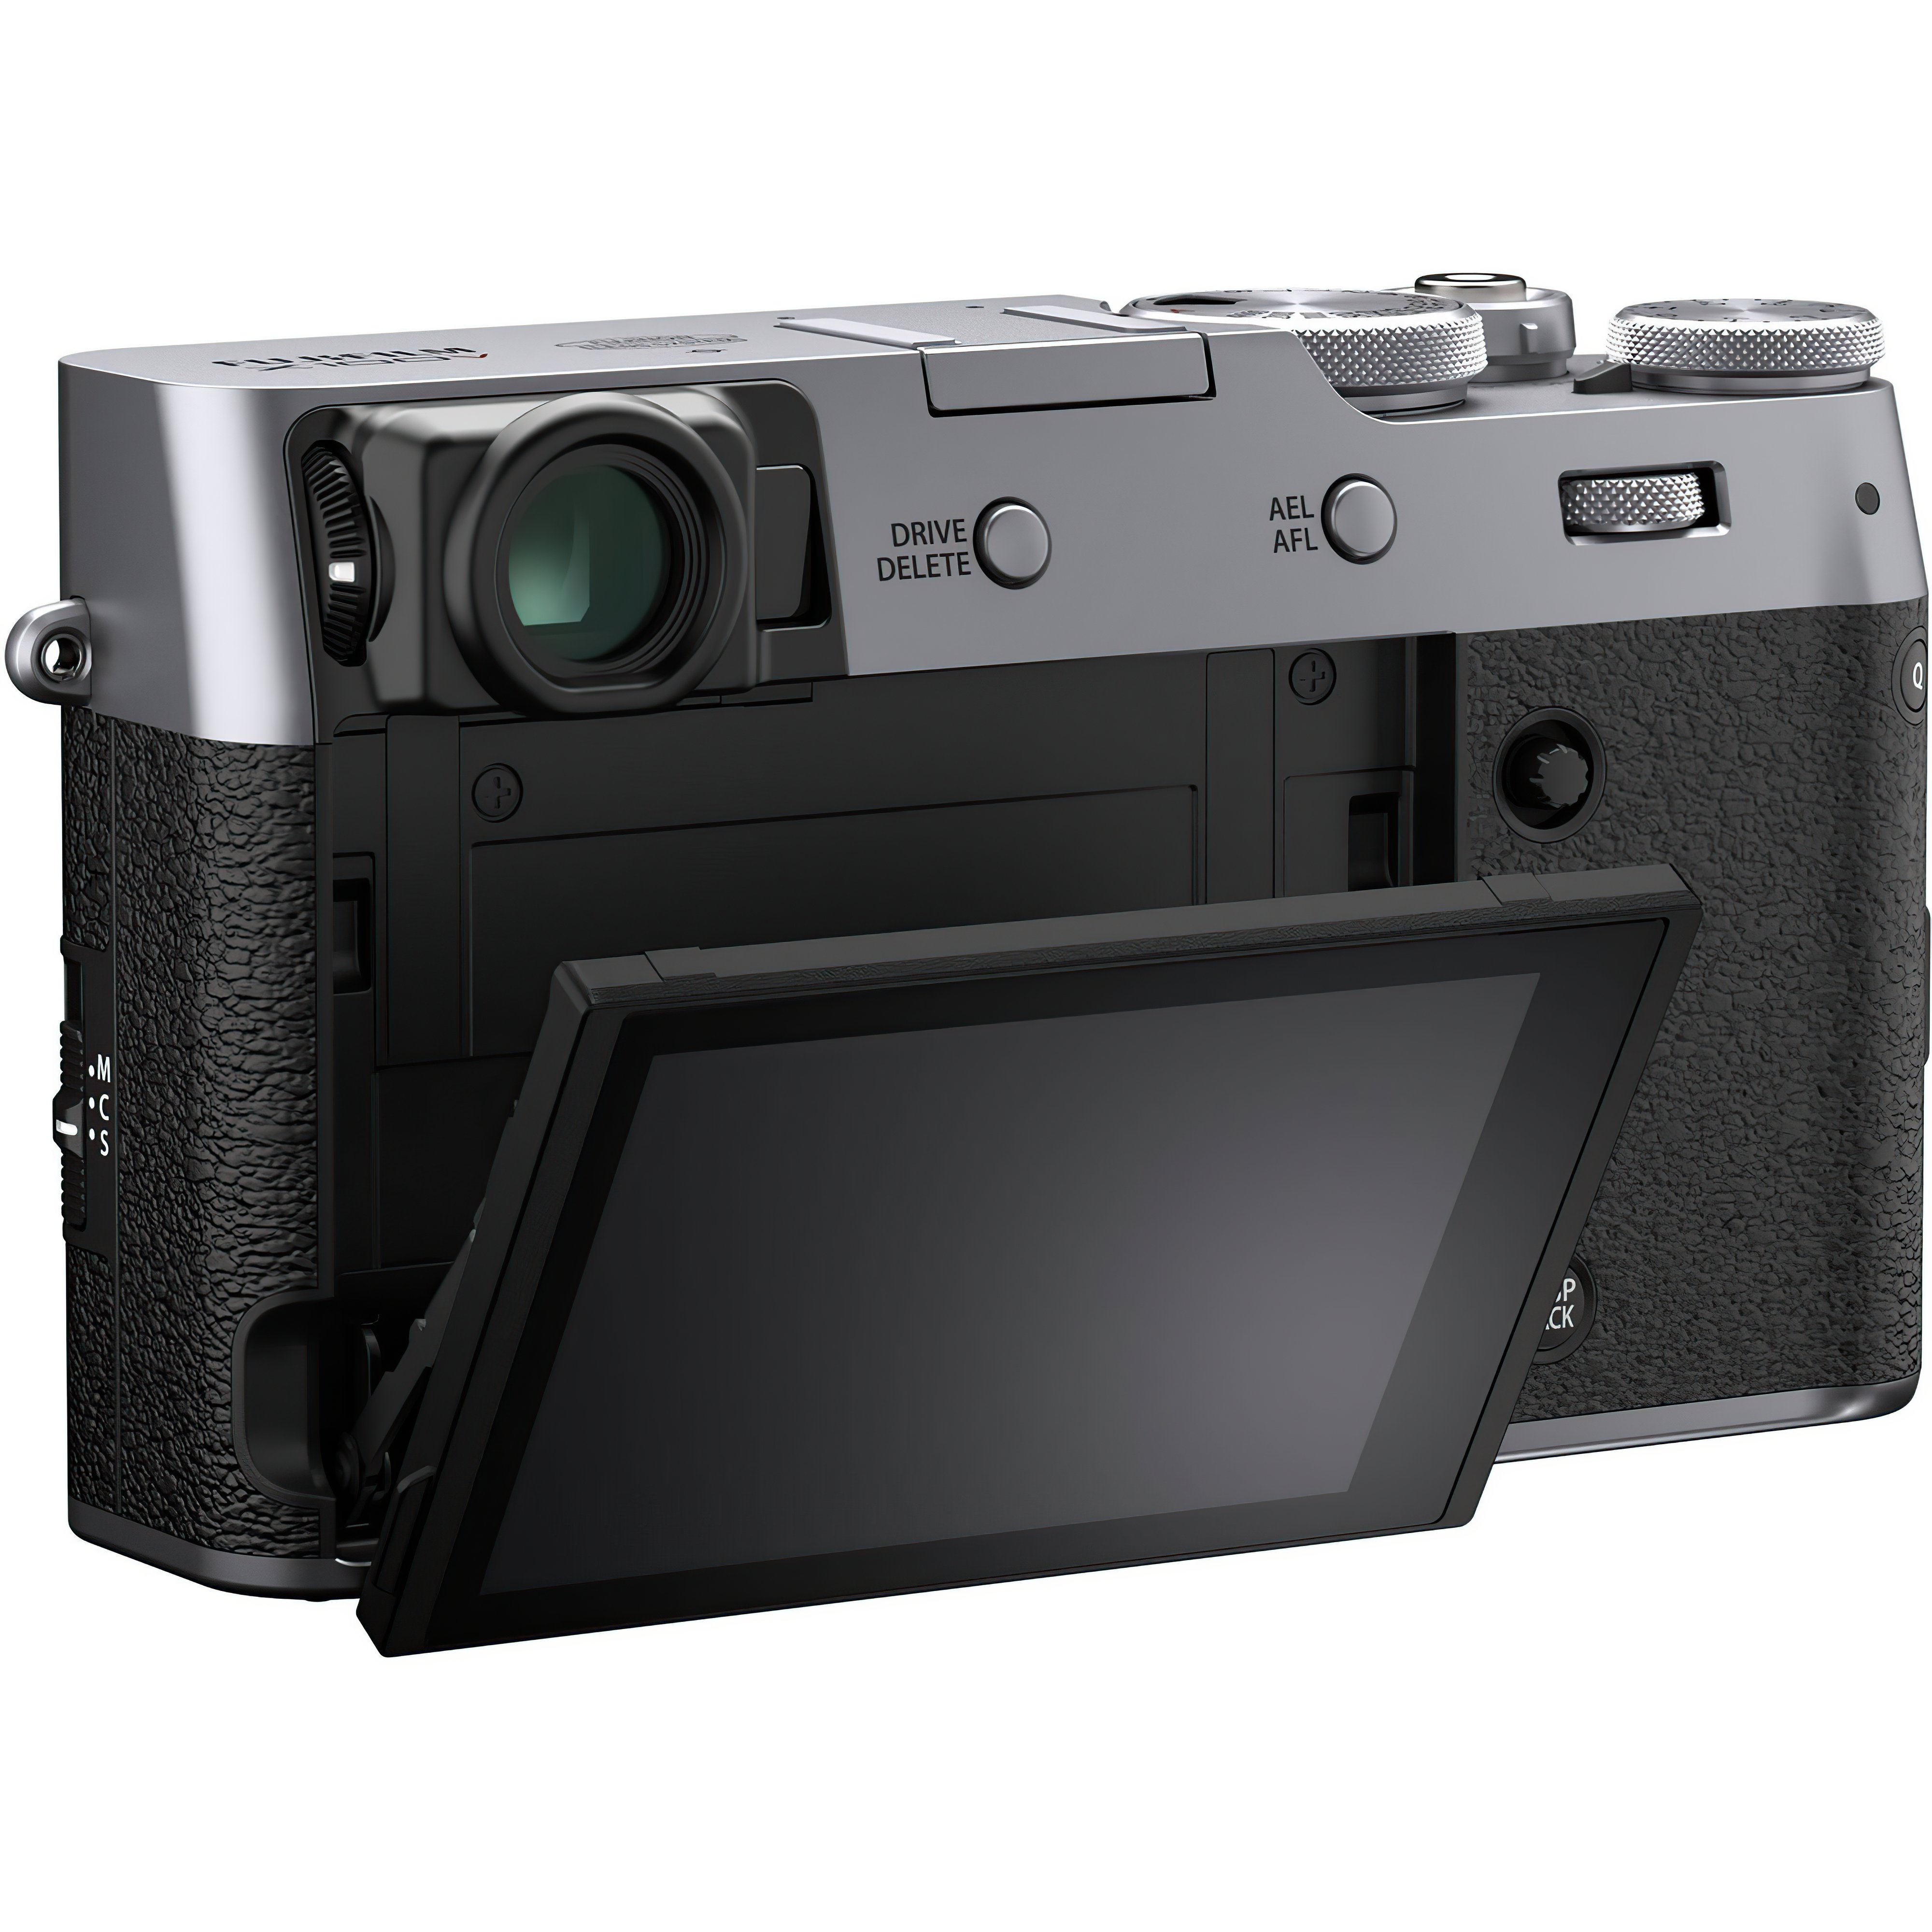 Фотоаппарат Fujifilm X100V, серебристый